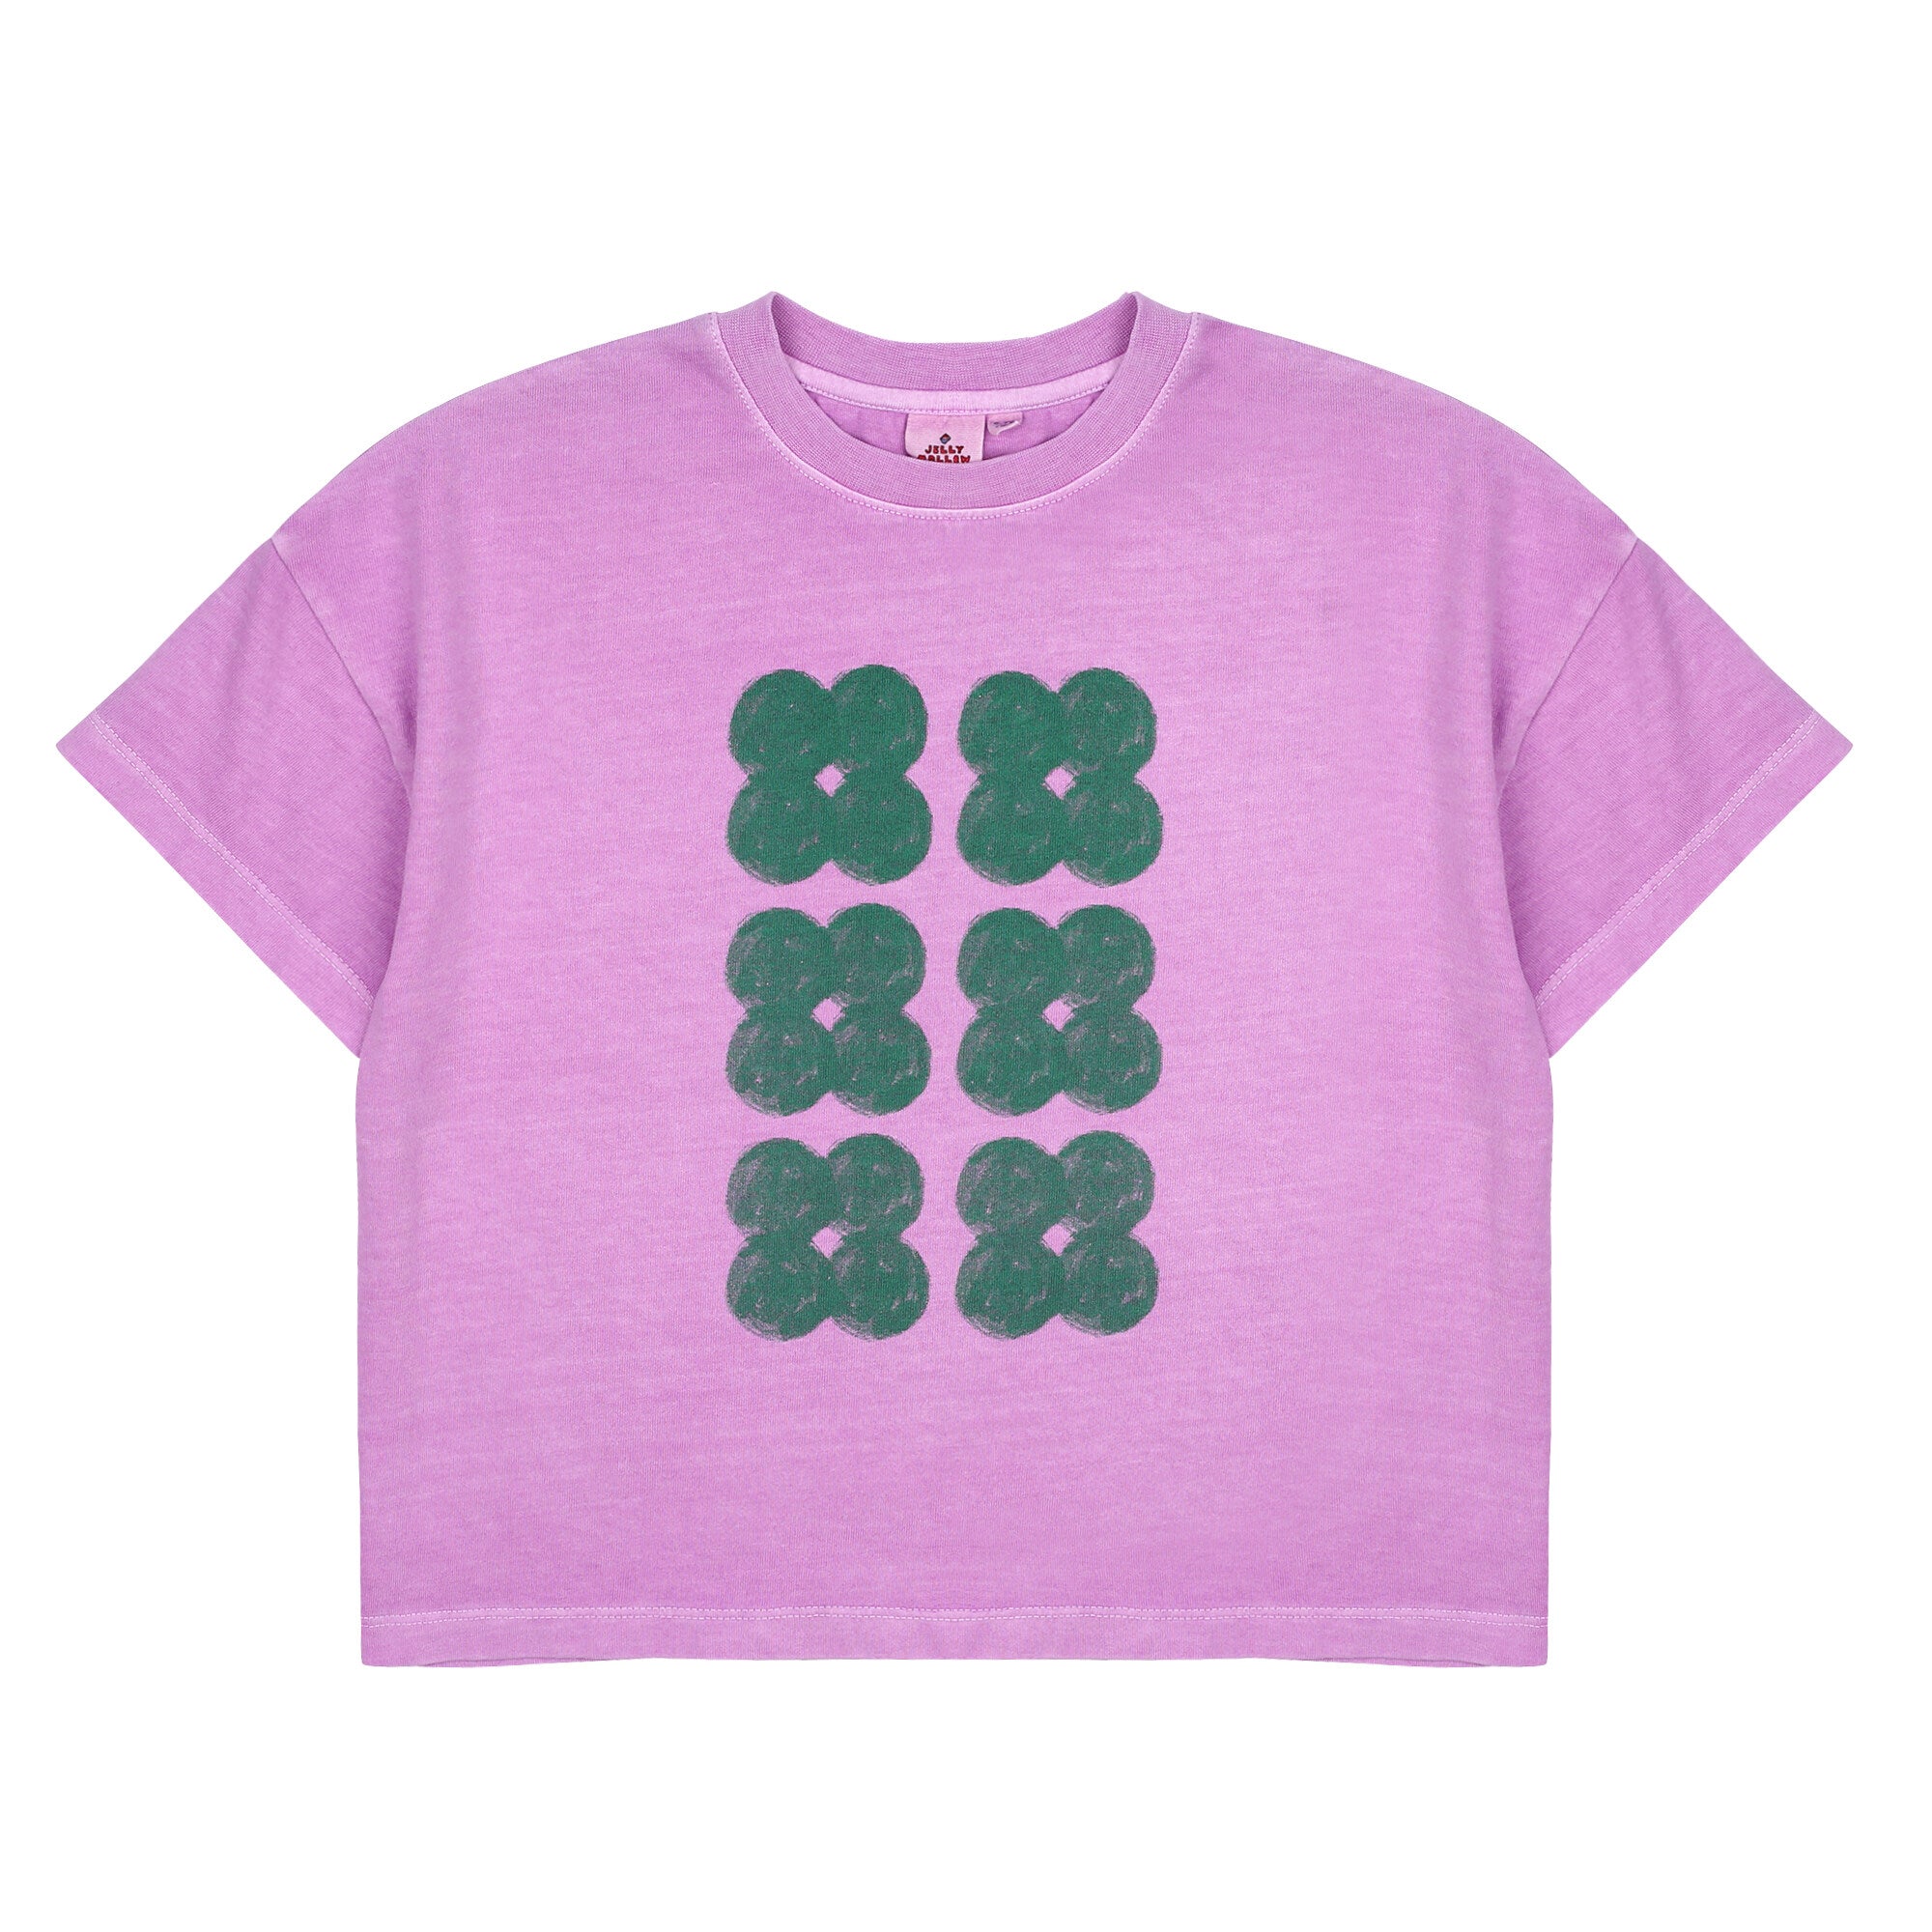 Boys & Girls Purple Printed Cotton T-Shirt